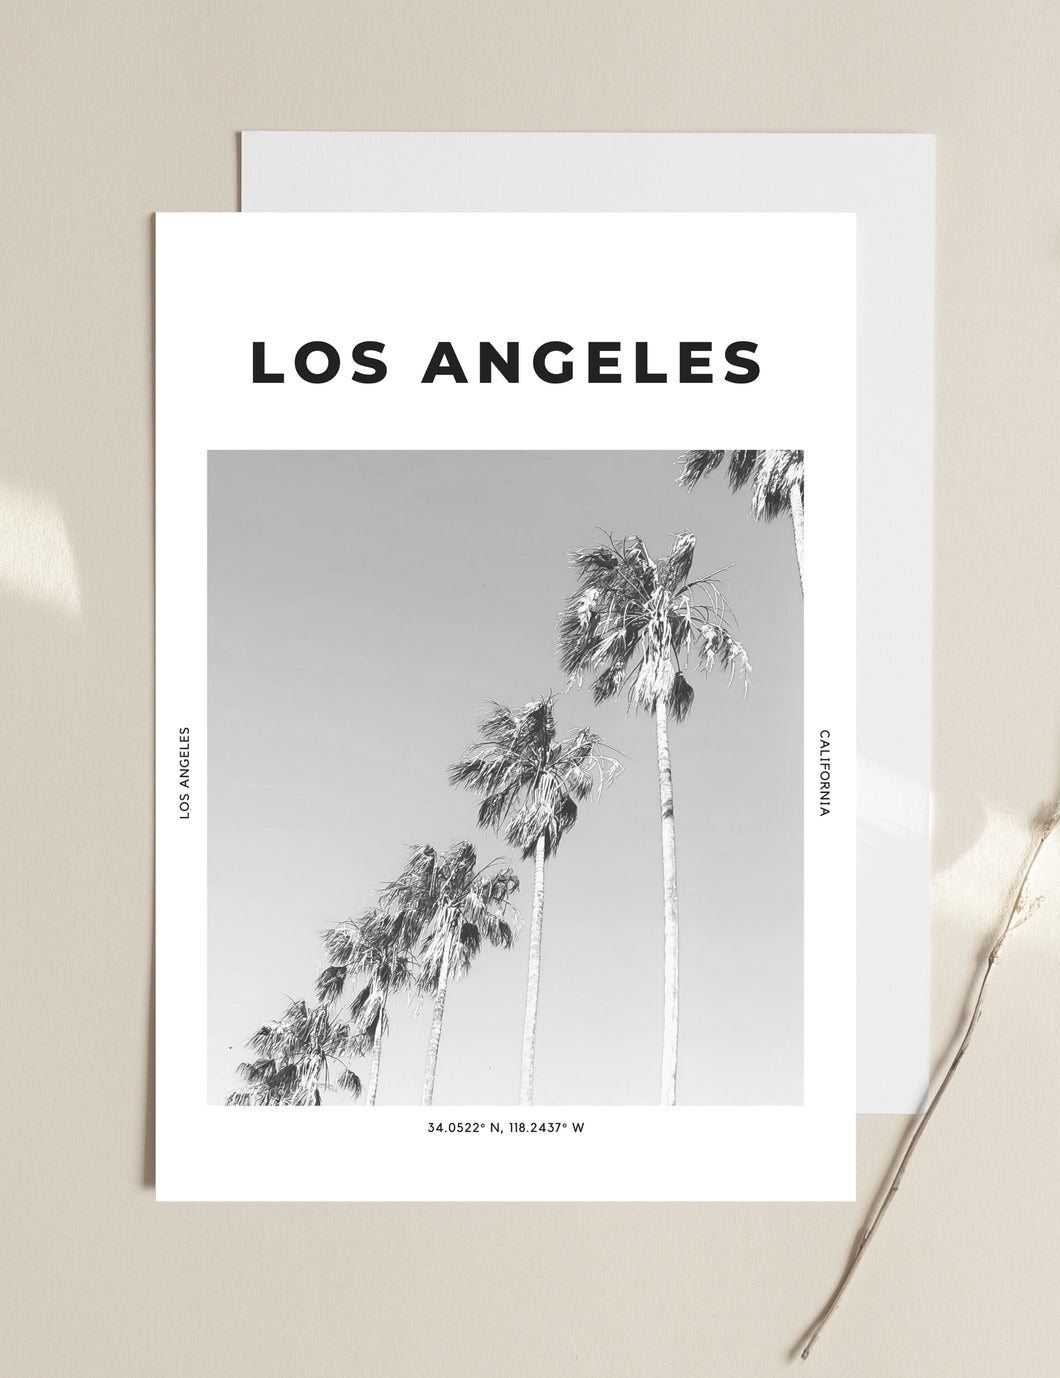 Los Angeles 'Shake Your Palm Palms' Print